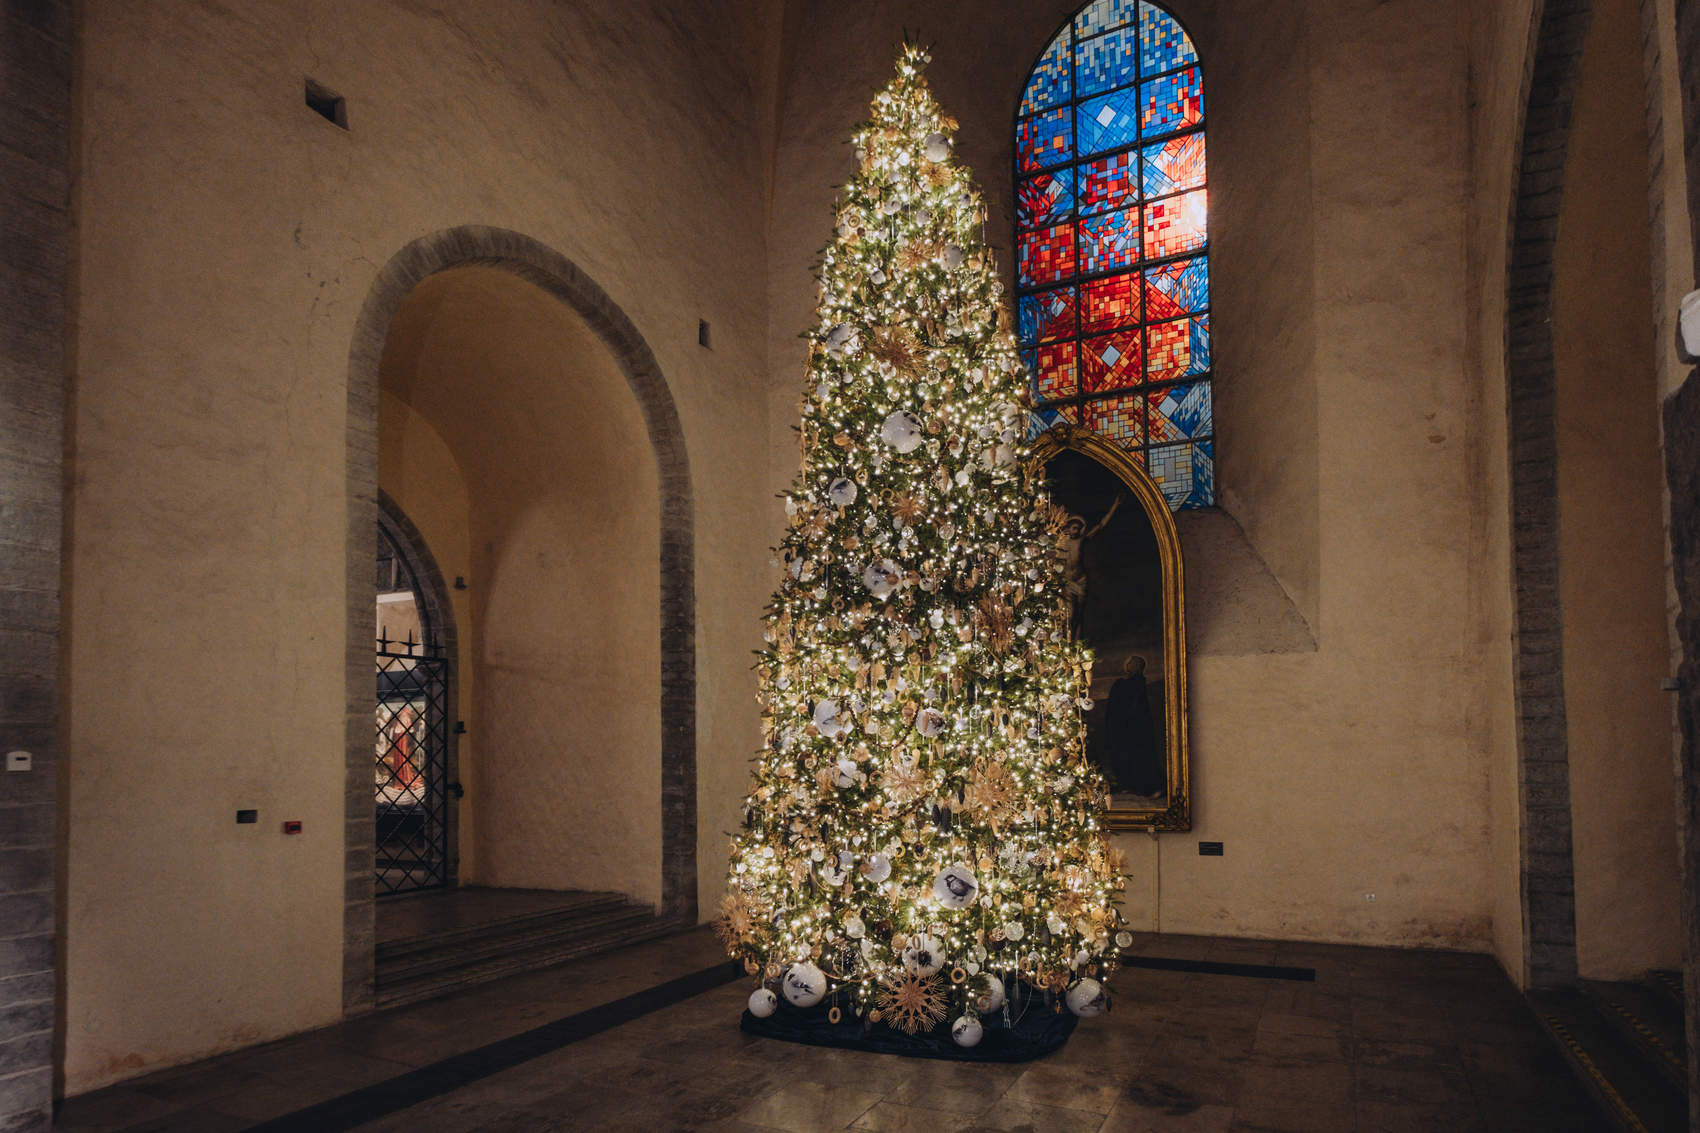 Christmas tree in St. Nicholas' Church in Tallinn, Estonia Photo: Kadi-Liis Koppel